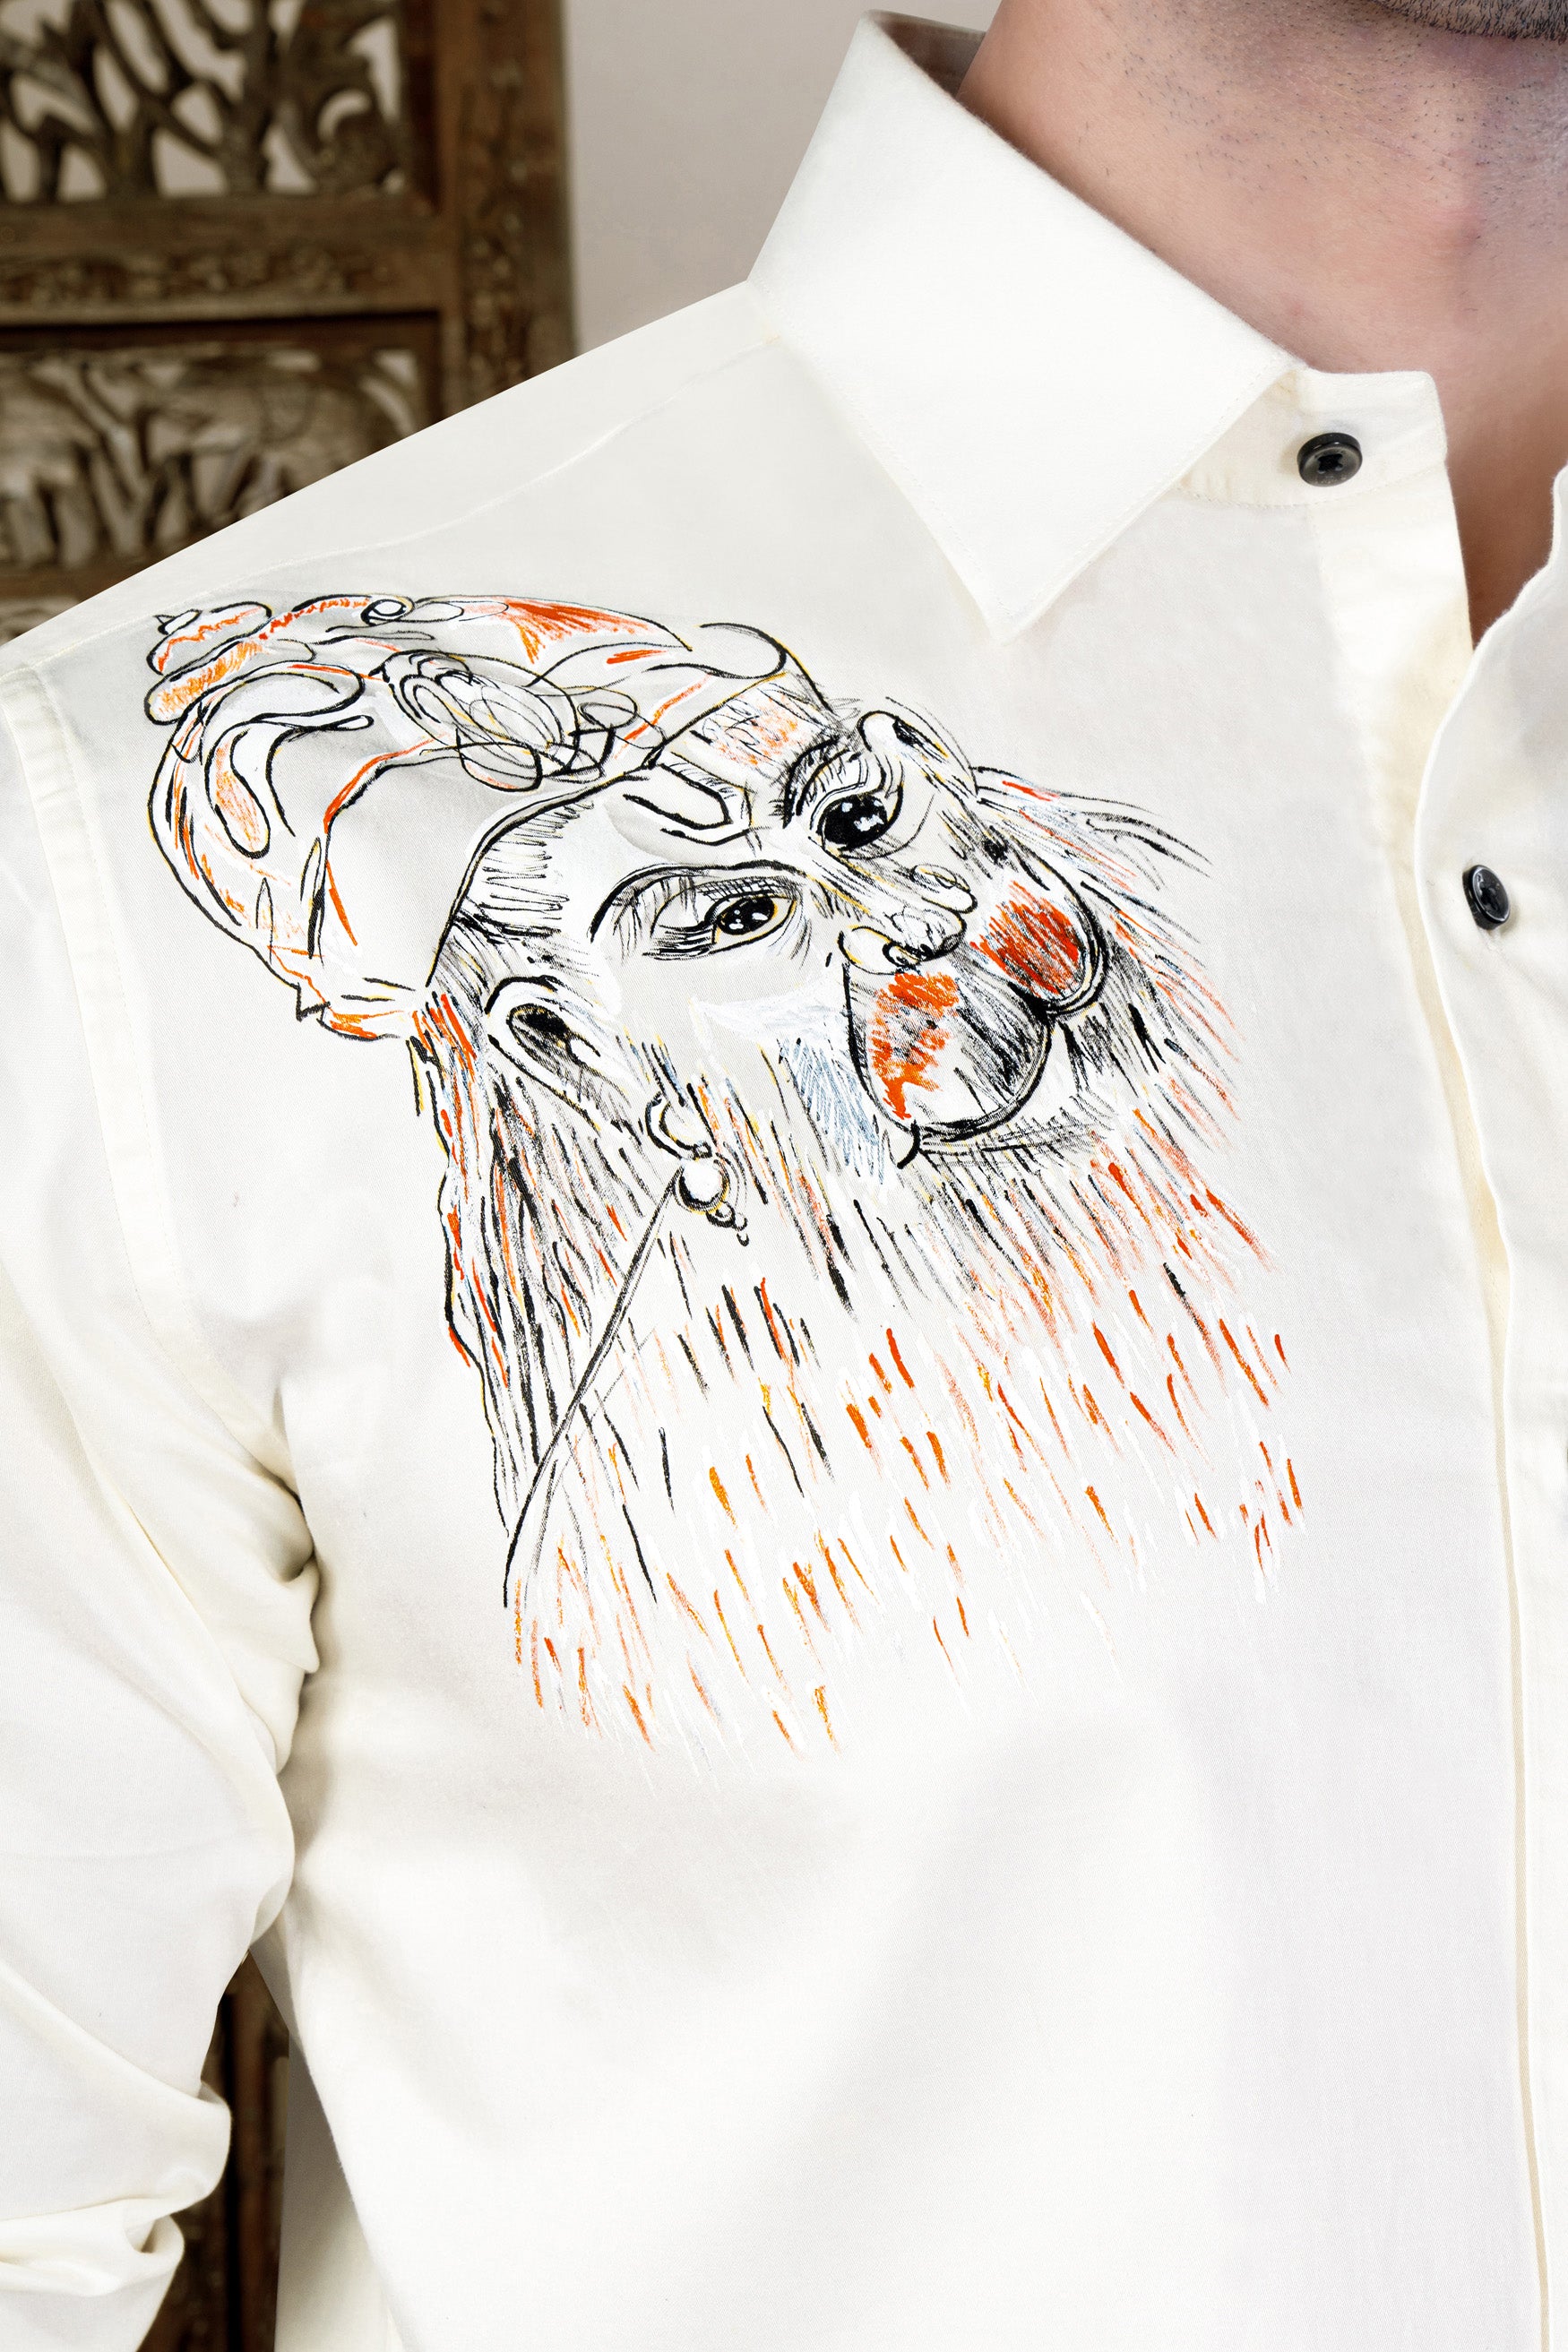 Desert Storm Lord Hanuman Hand Painted Subtle Sheen Super Soft Premium Cotton Designer Shirt 12165-BLK-ART-38, 12165-BLK-ART-H-38, 12165-BLK-ART-39, 12165-BLK-ART-H-39, 12165-BLK-ART-40, 12165-BLK-ART-H-40, 12165-BLK-ART-42, 12165-BLK-ART-H-42, 12165-BLK-ART-44, 12165-BLK-ART-H-44, 12165-BLK-ART-46, 12165-BLK-ART-H-46, 12165-BLK-ART-48, 12165-BLK-ART-H-48, 12165-BLK-ART-50, 12165-BLK-ART-H-50, 12165-BLK-ART-52, 12165-BLK-ART-H-52